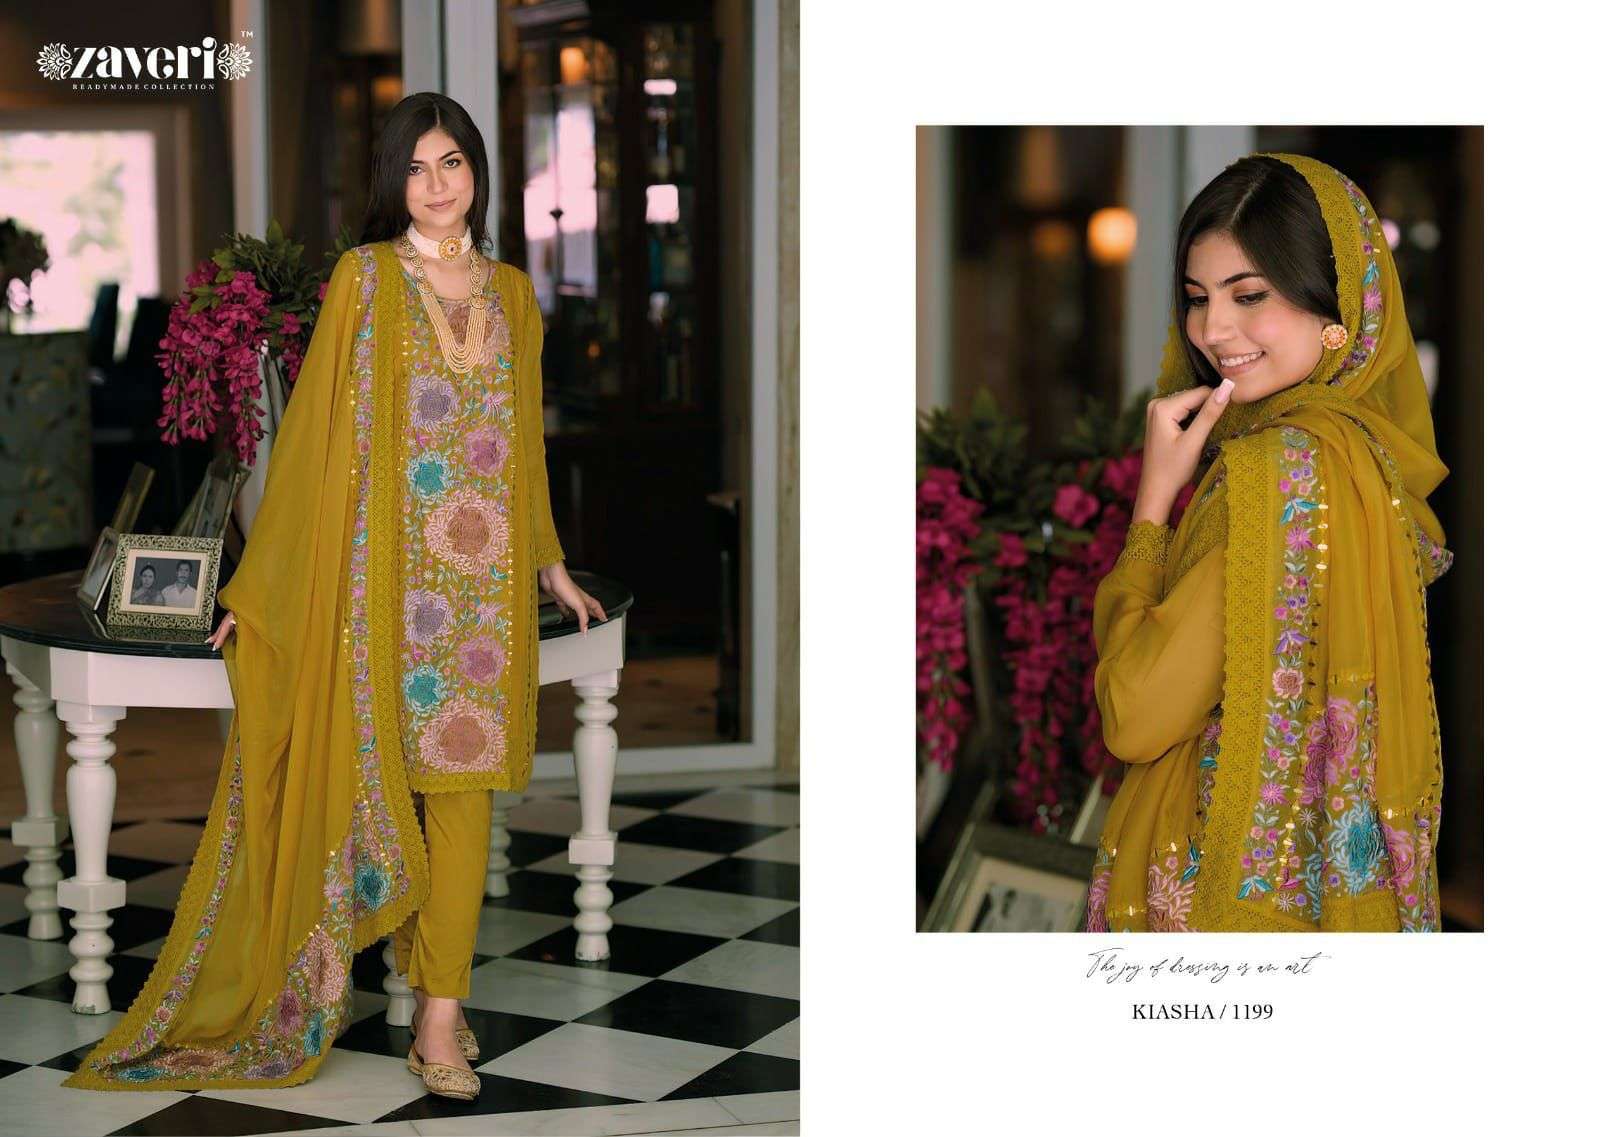 zaveri kiasha 1197-1200 series exclusive designer salwar suits catalogue online wholesale surat